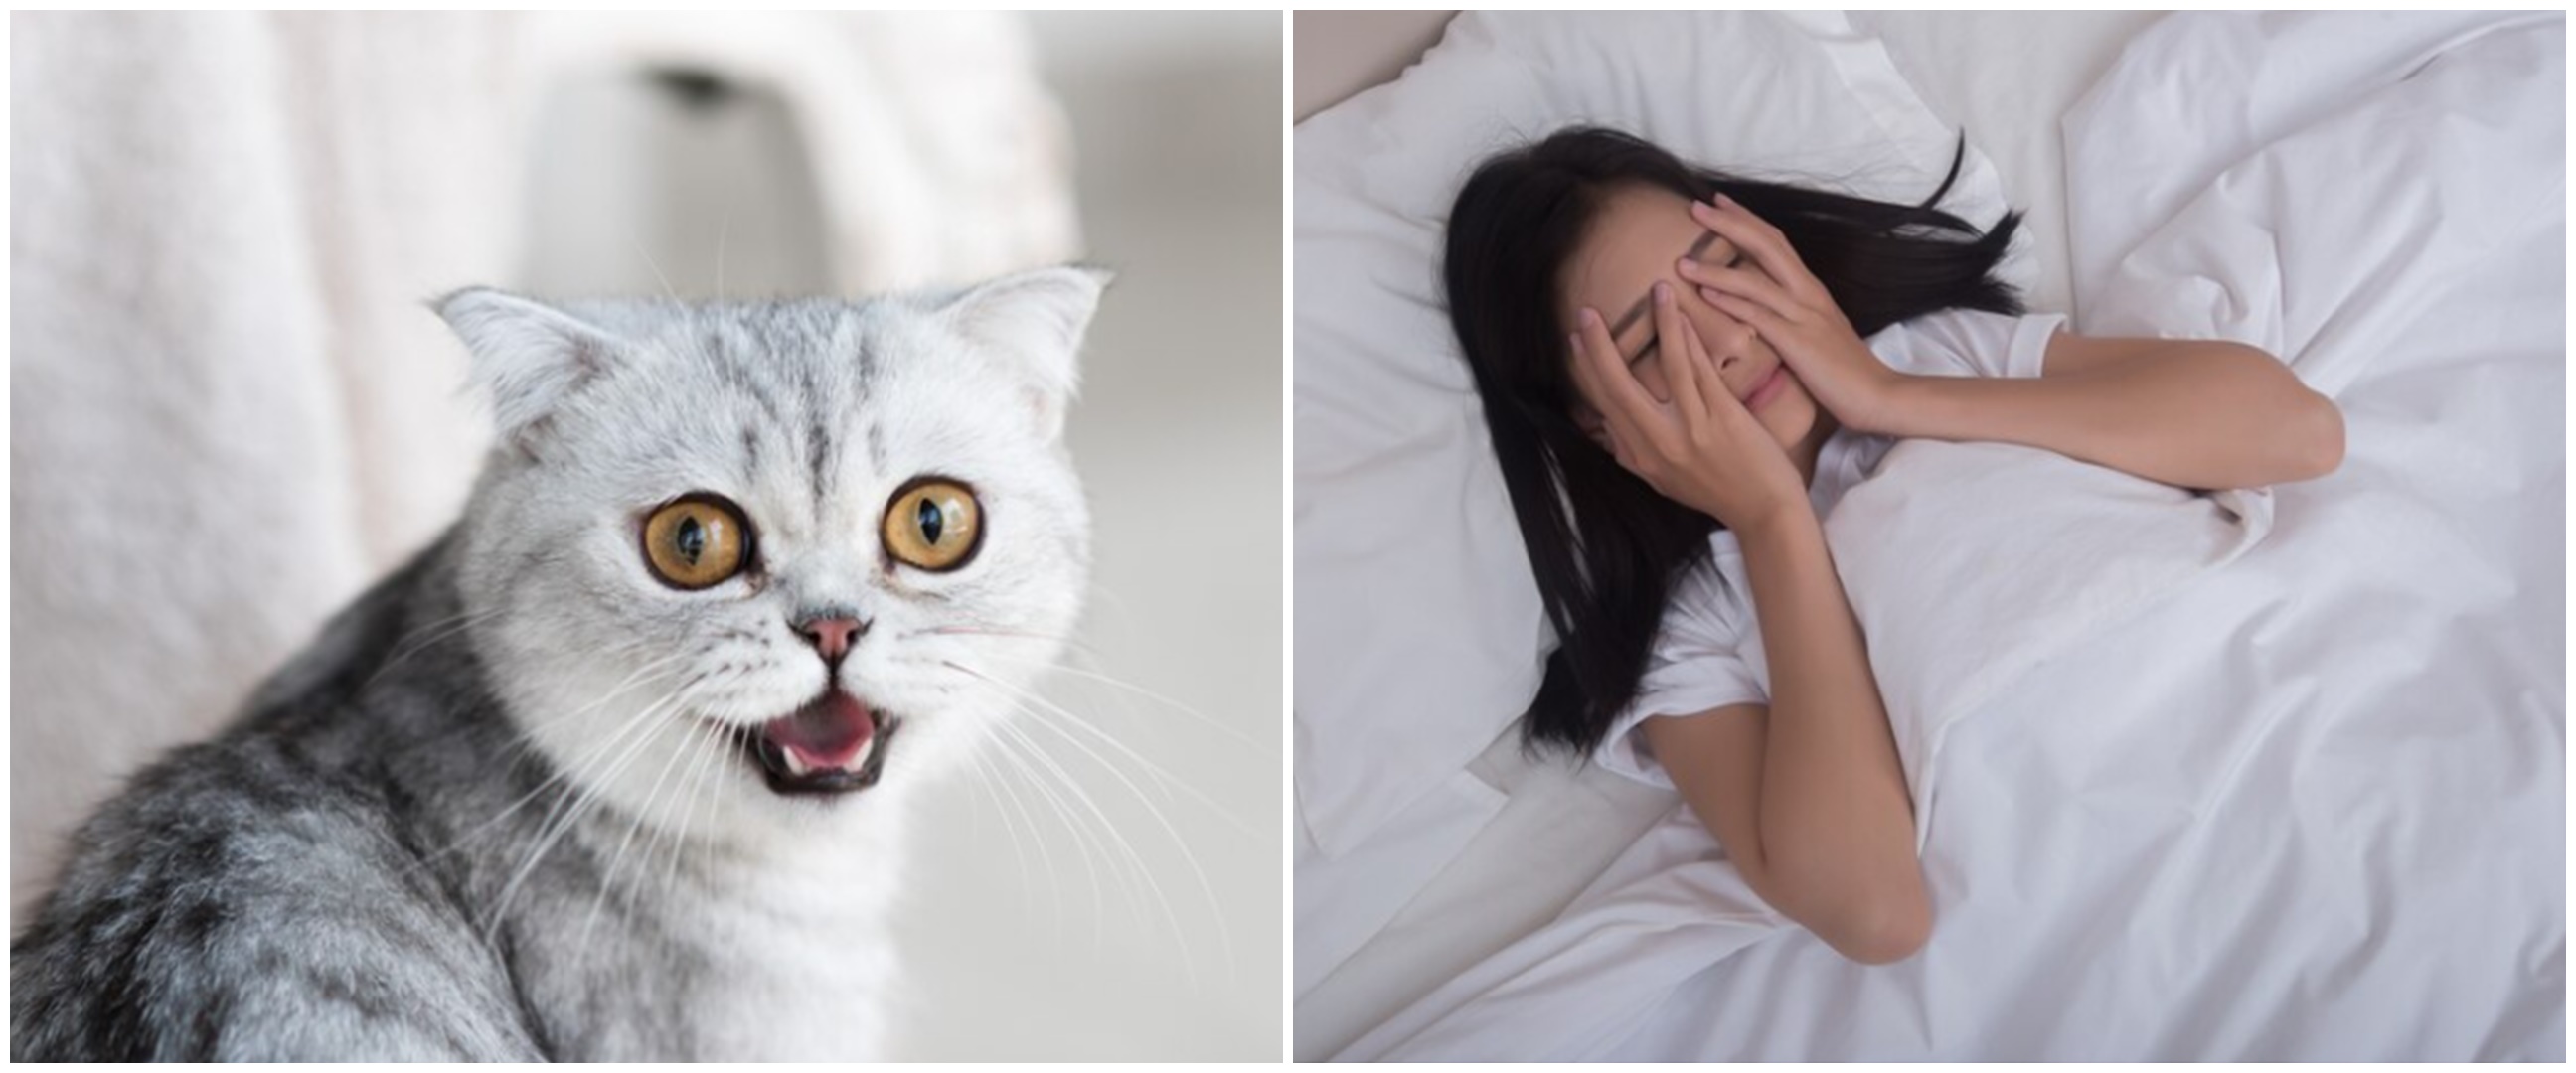 7 Arti mimpi digigit kucing yang perlu diketahui, jadi peringatan